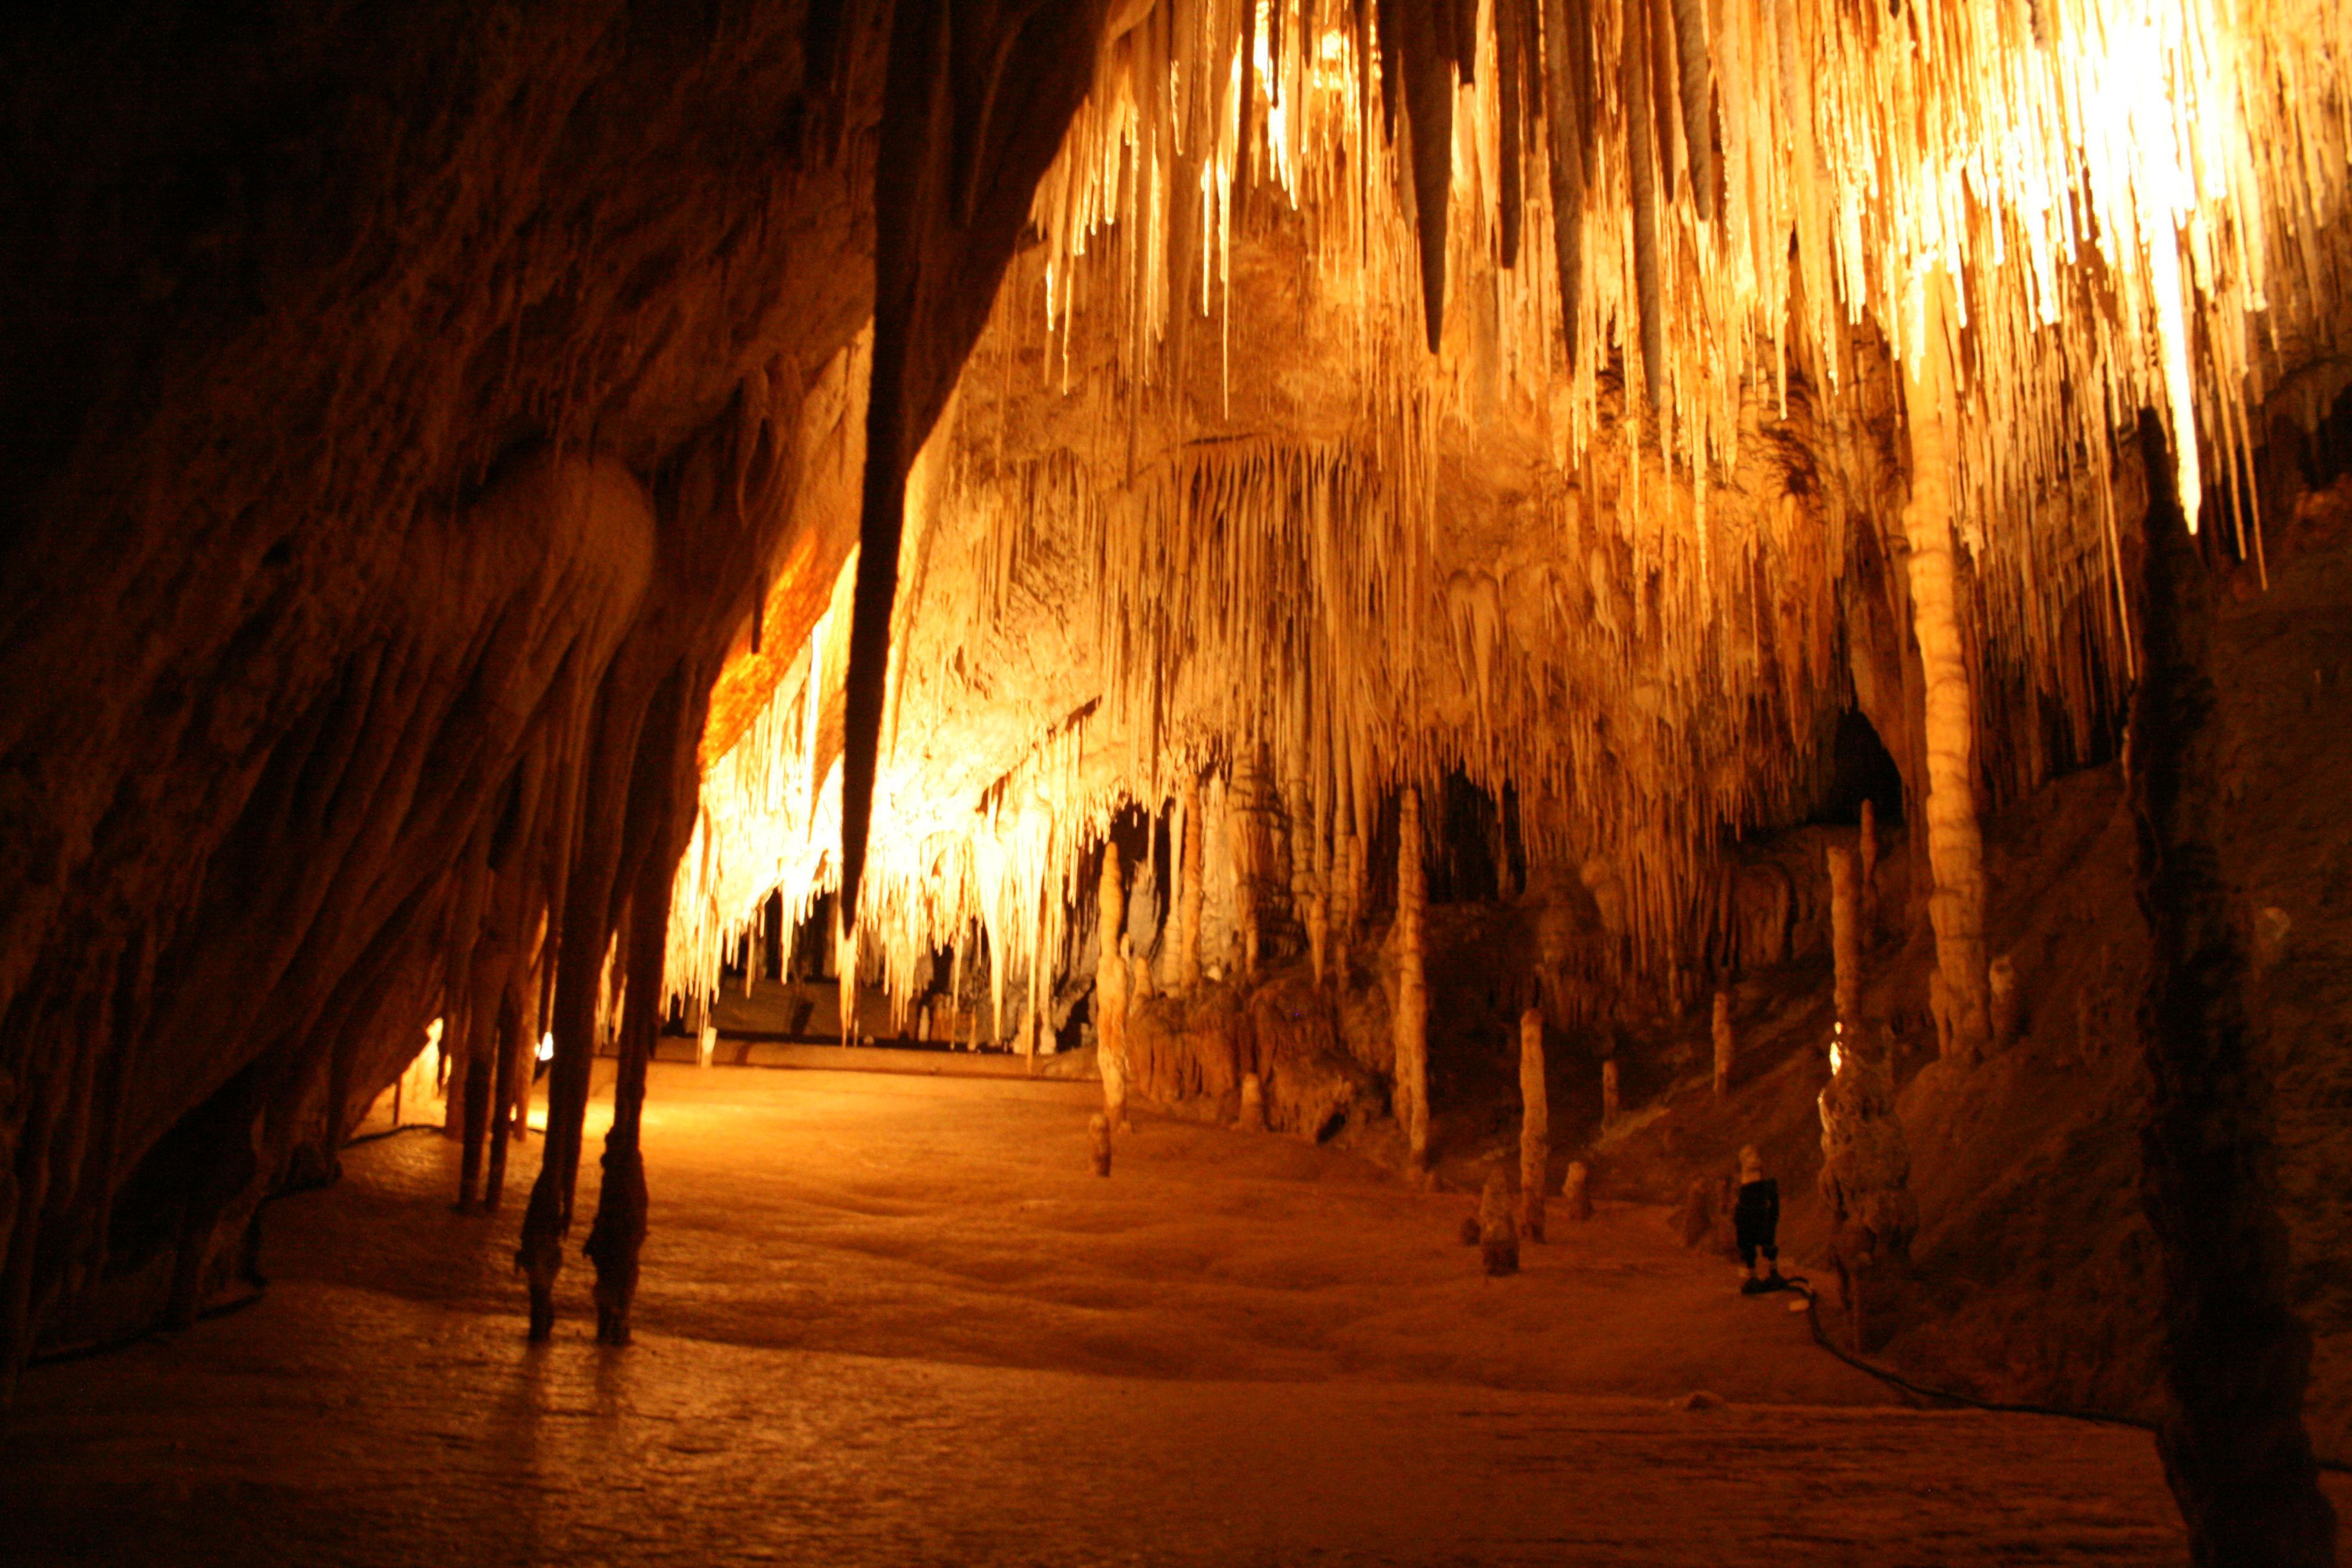 Illuminated Caves Hd Wallpaper